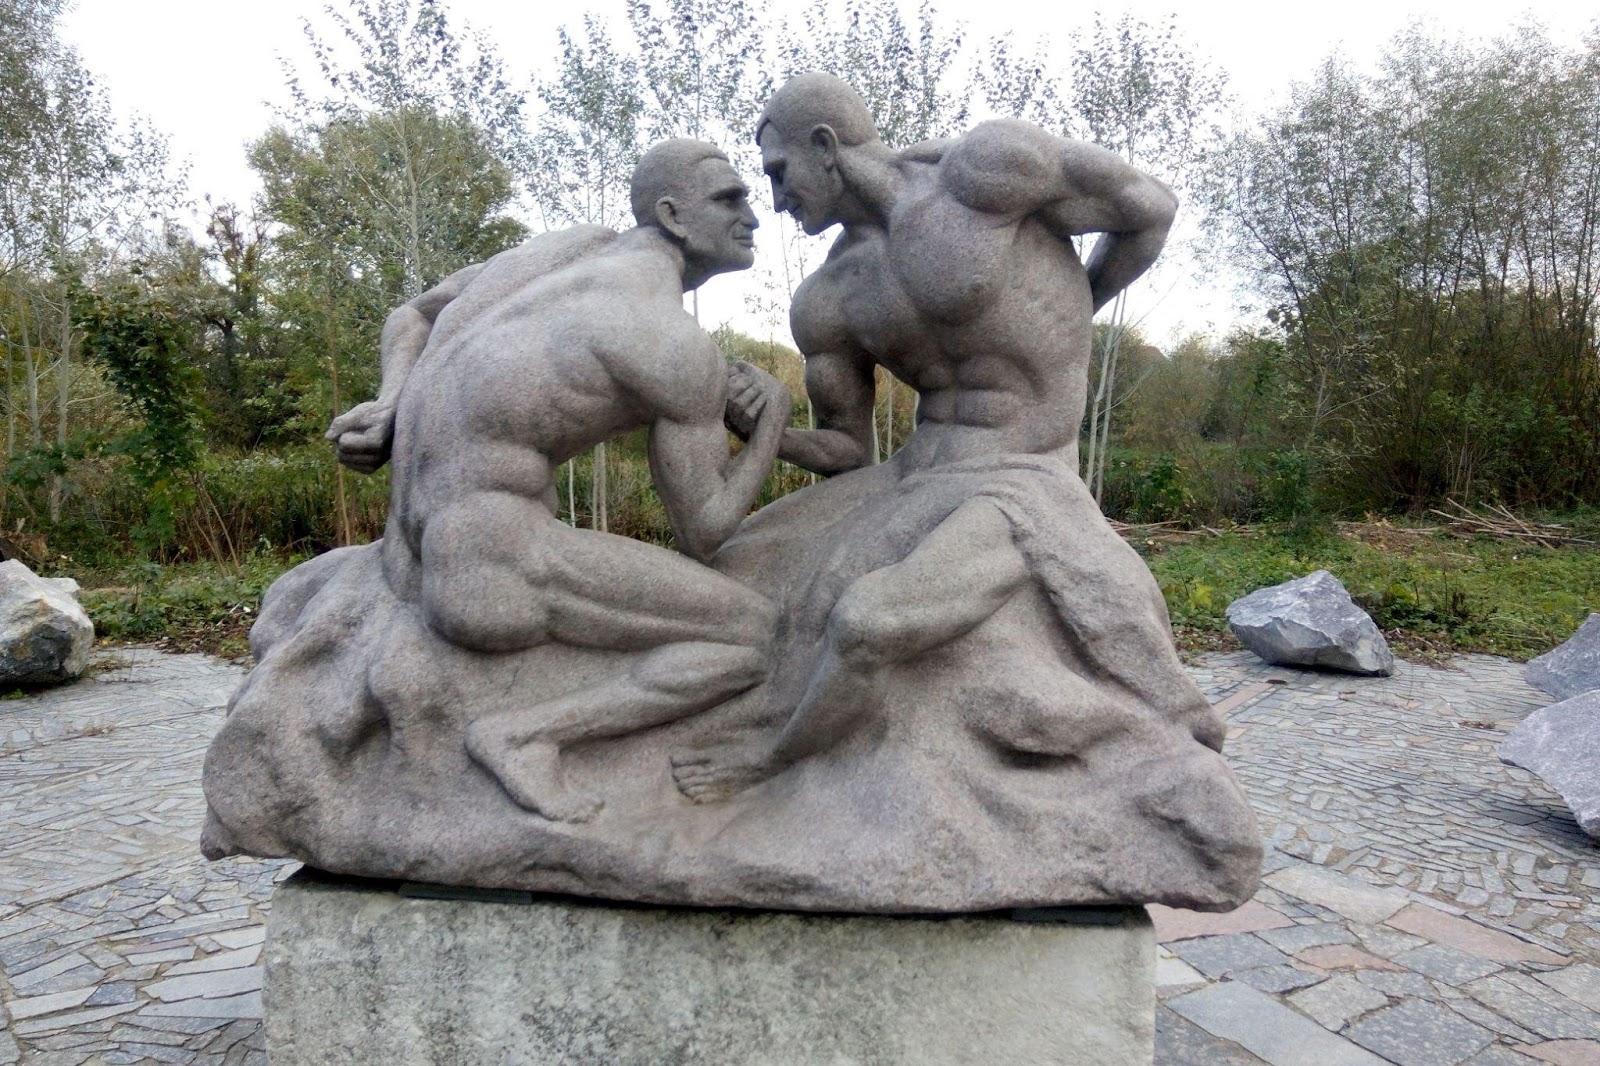 The sculpture featuring Klitschko brothers.